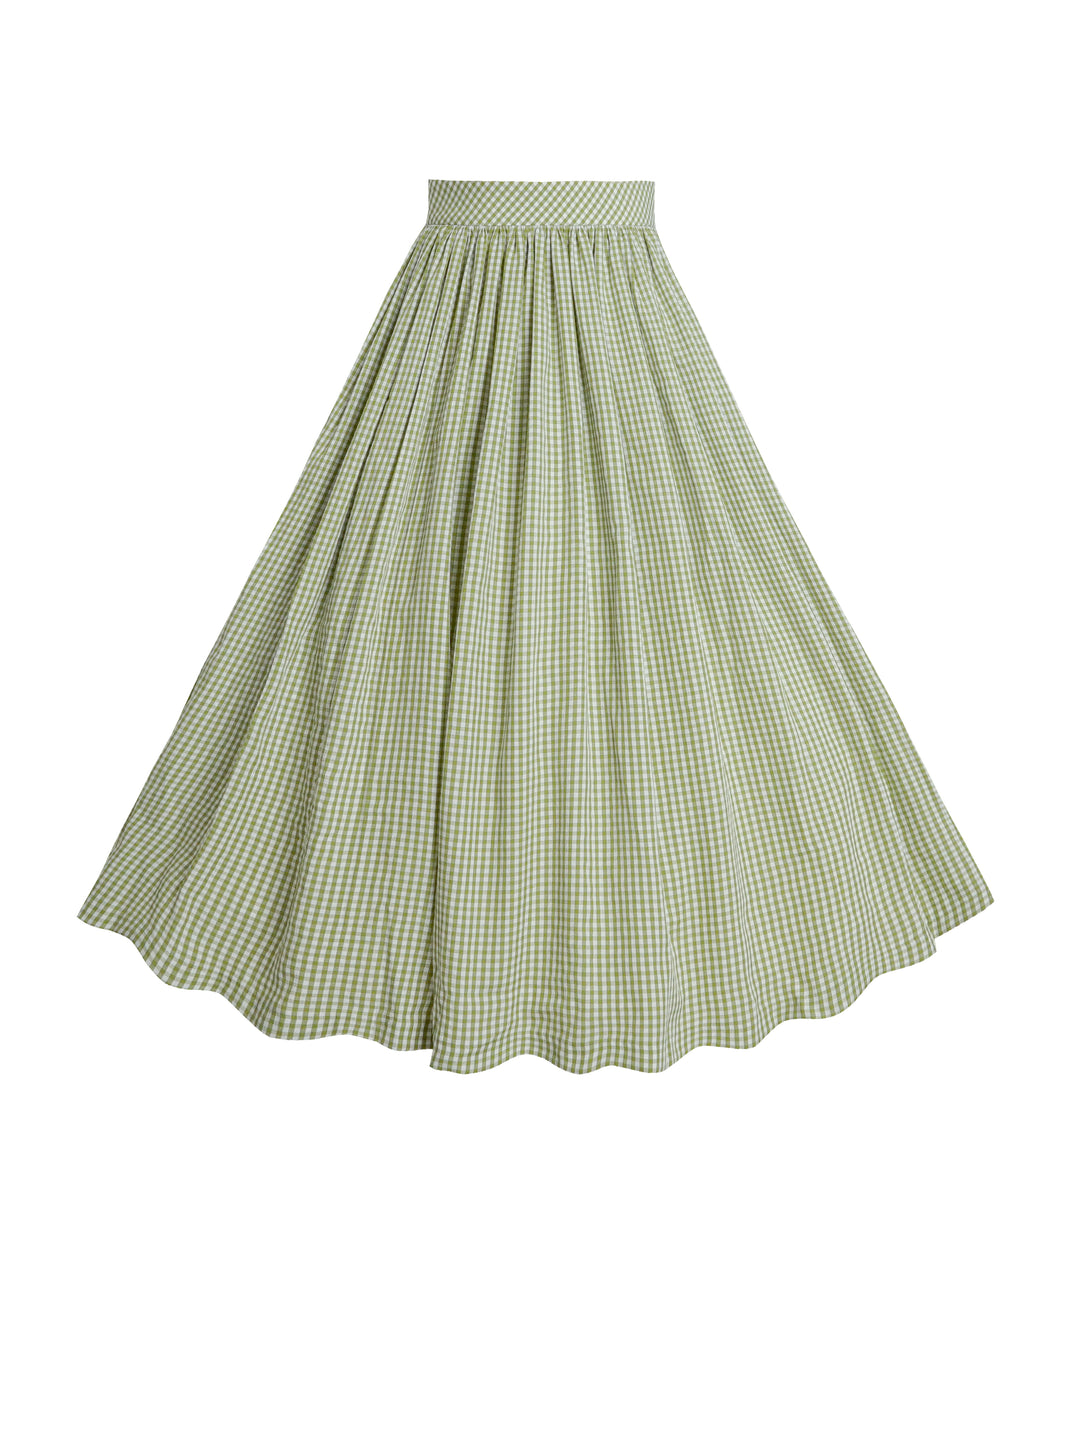 Choose a fabric: Lola Skirt